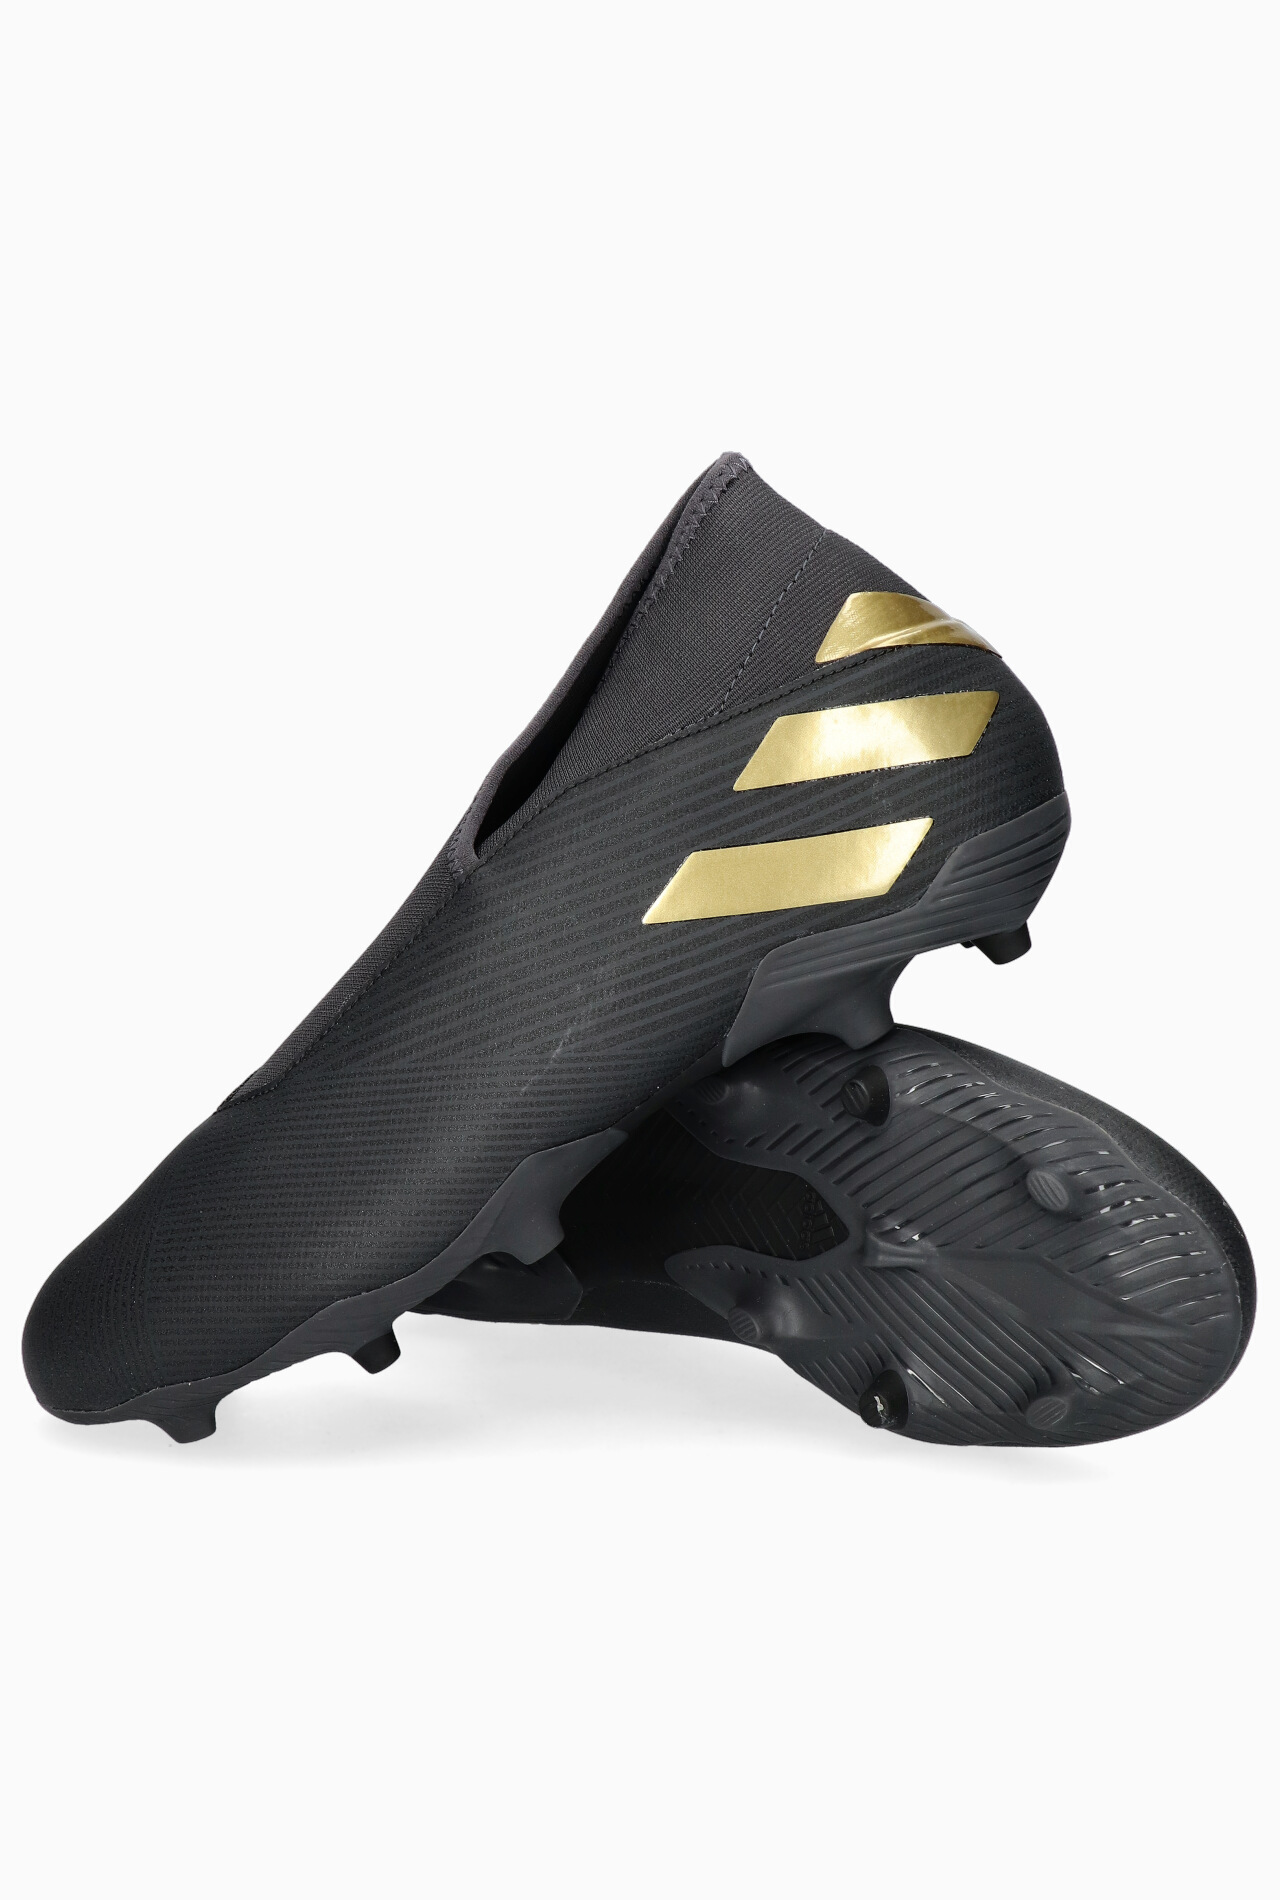 adidas Nemeziz 19.3 LL FG | R-GOL.com Football boots & equipment